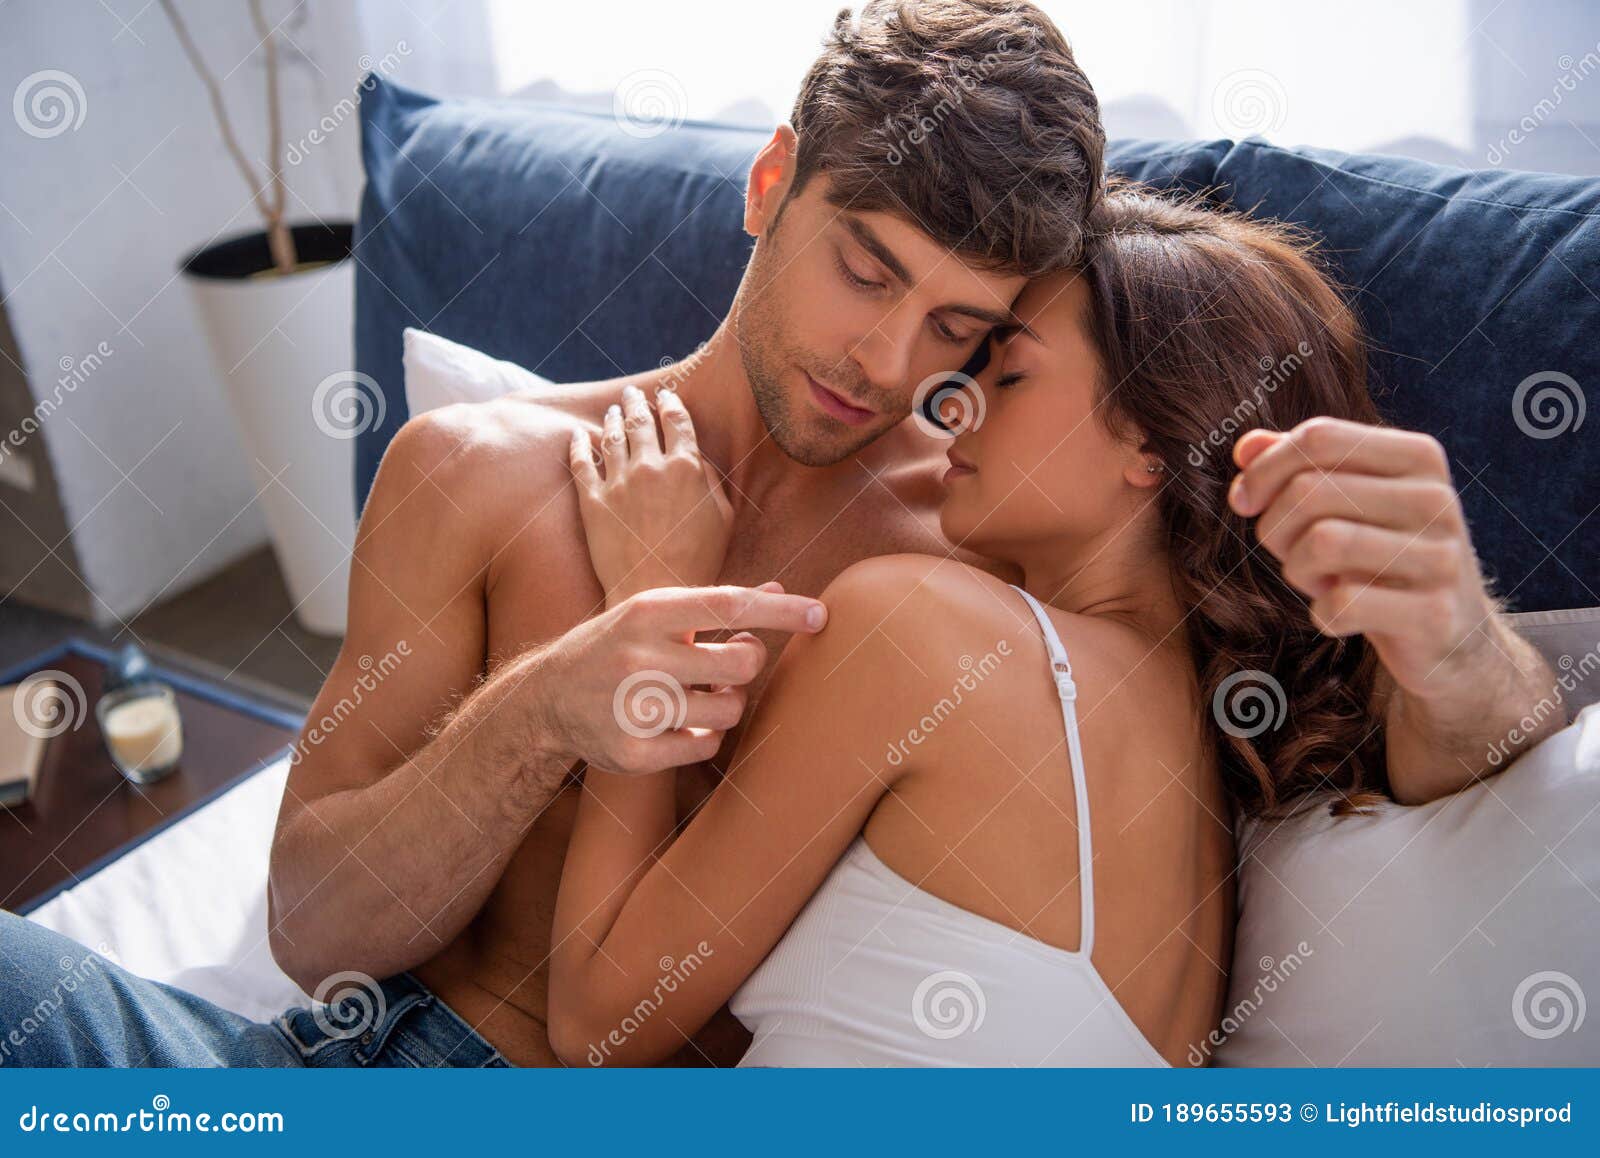 Stock kissing girlfriend bra — hugging apartment boyfriend 